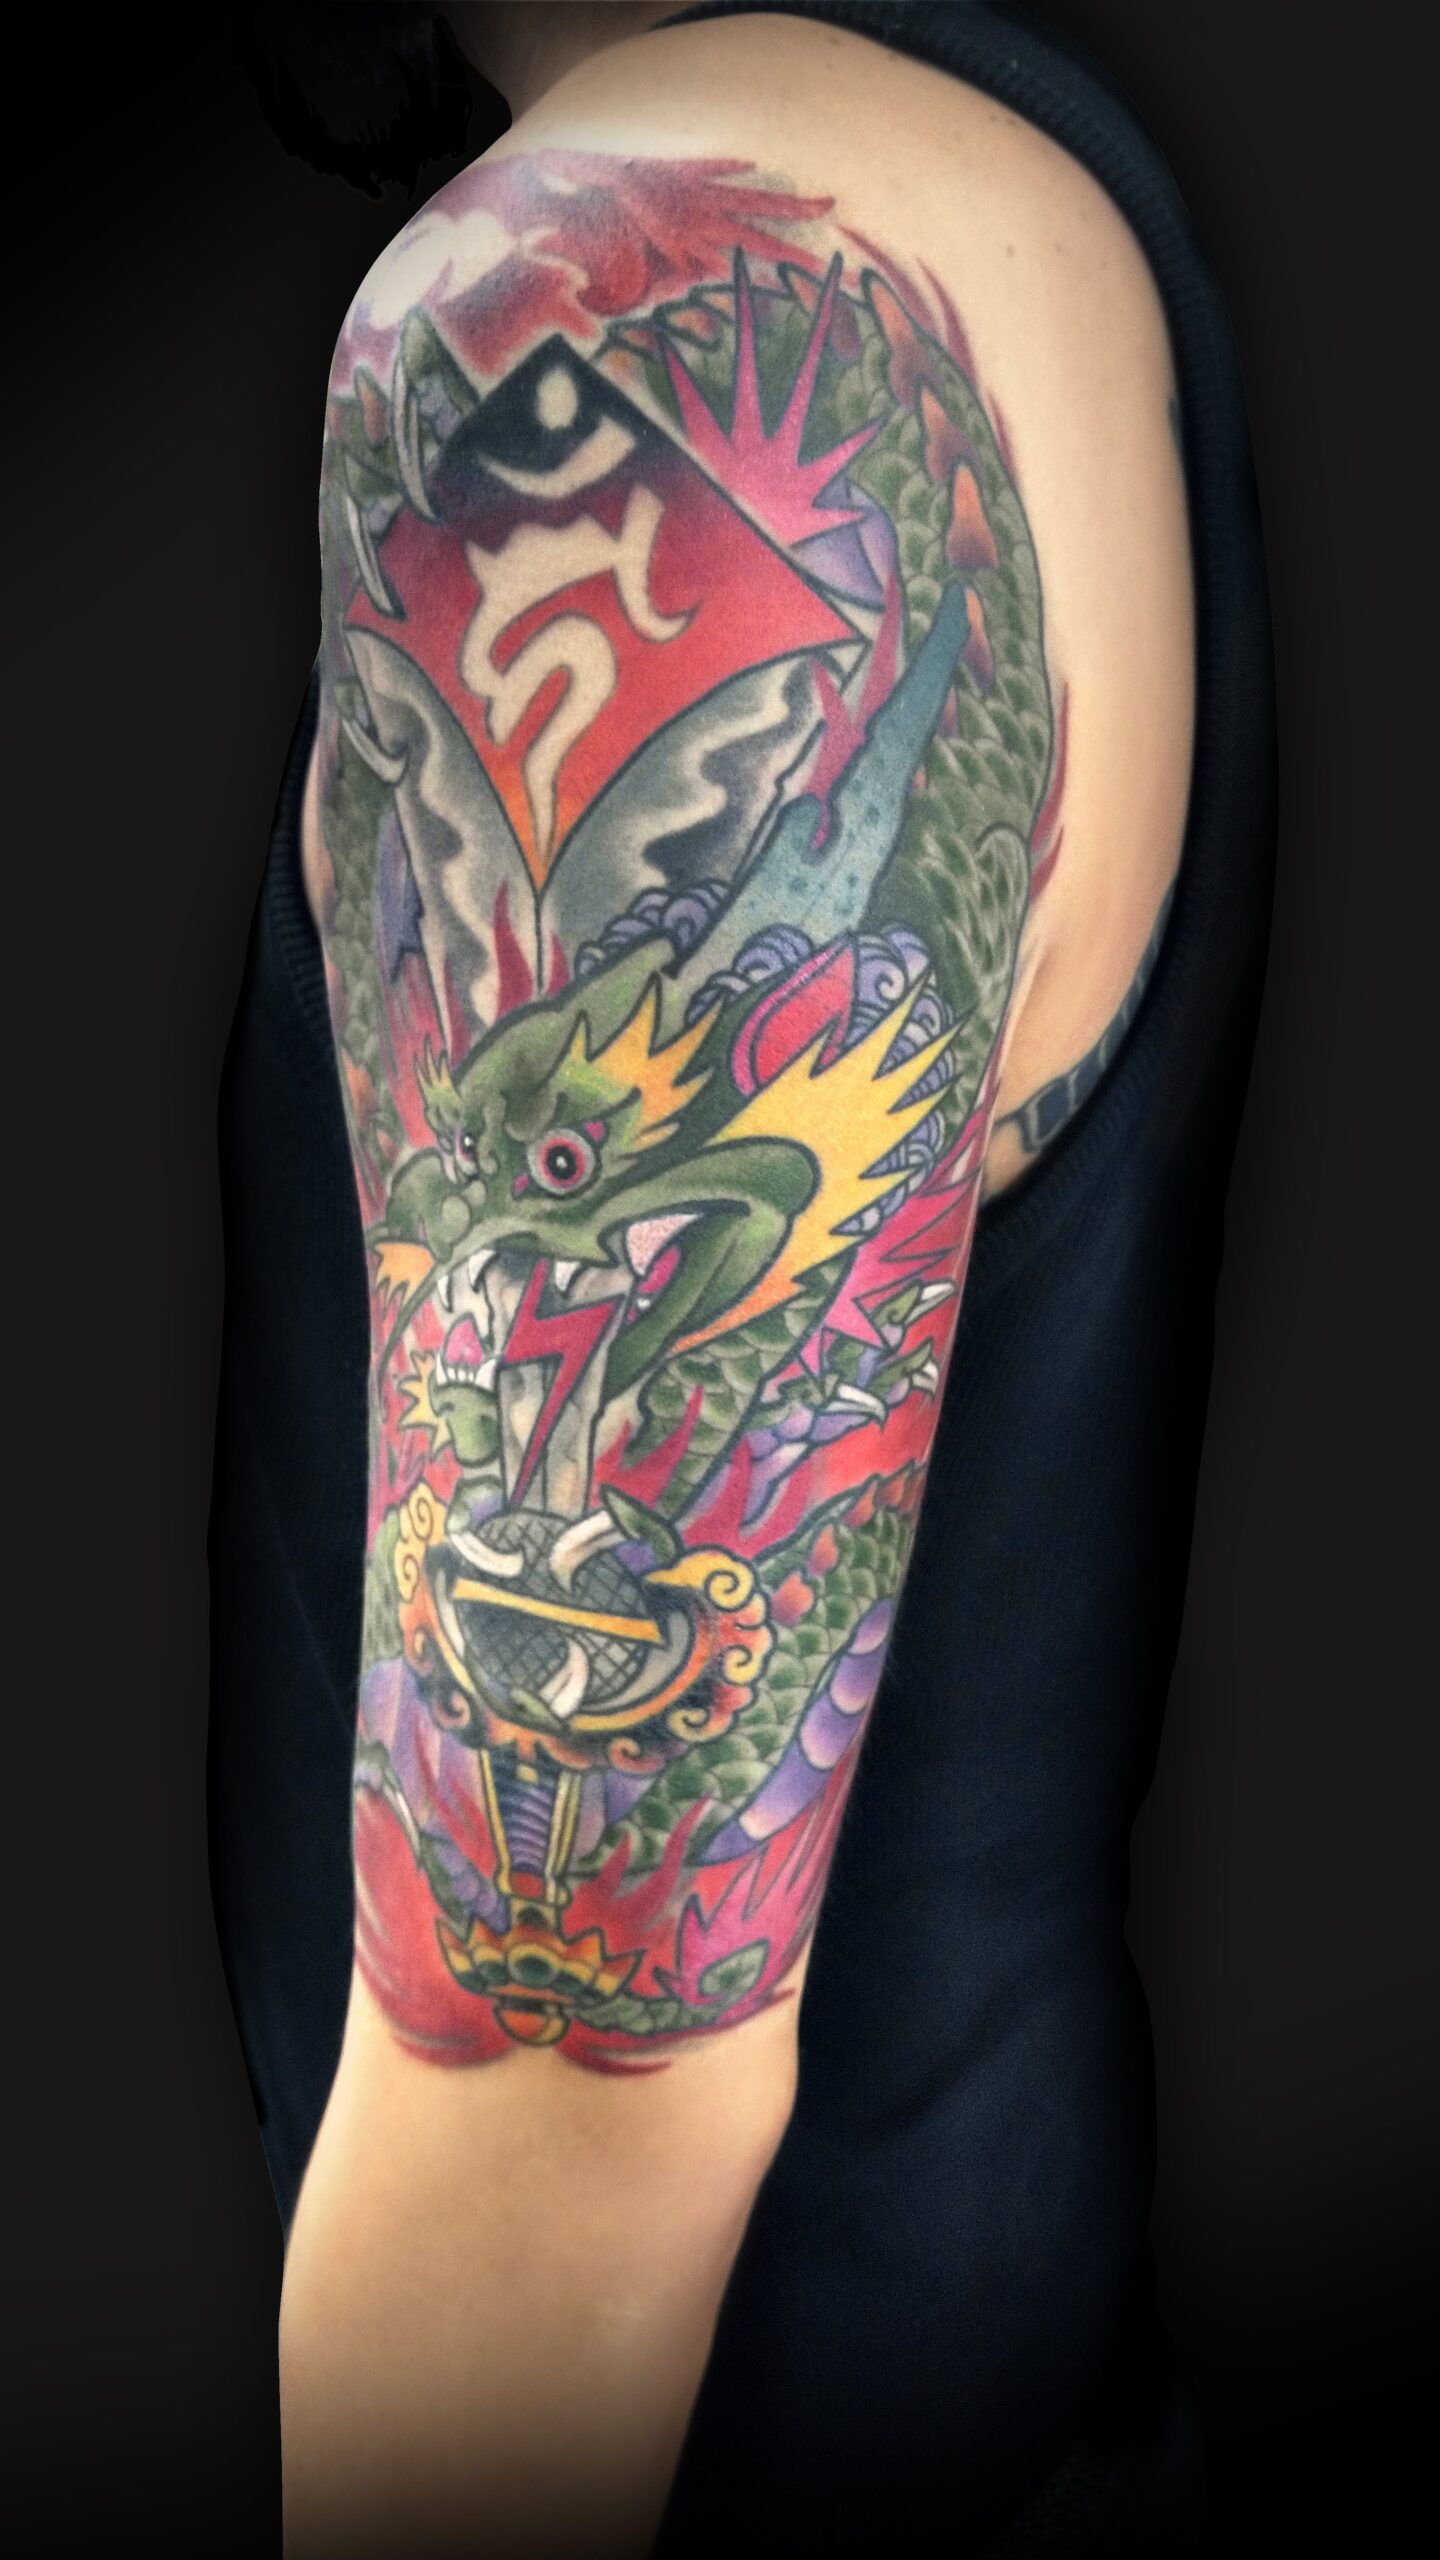 KING RAT TATTOO 作品 | LAVA gallery | Tattoo artist: Yuji Anai | キングラット | ラバギャラリー | タトゥーアート | 福岡県北九州市 | shoulder04 202107